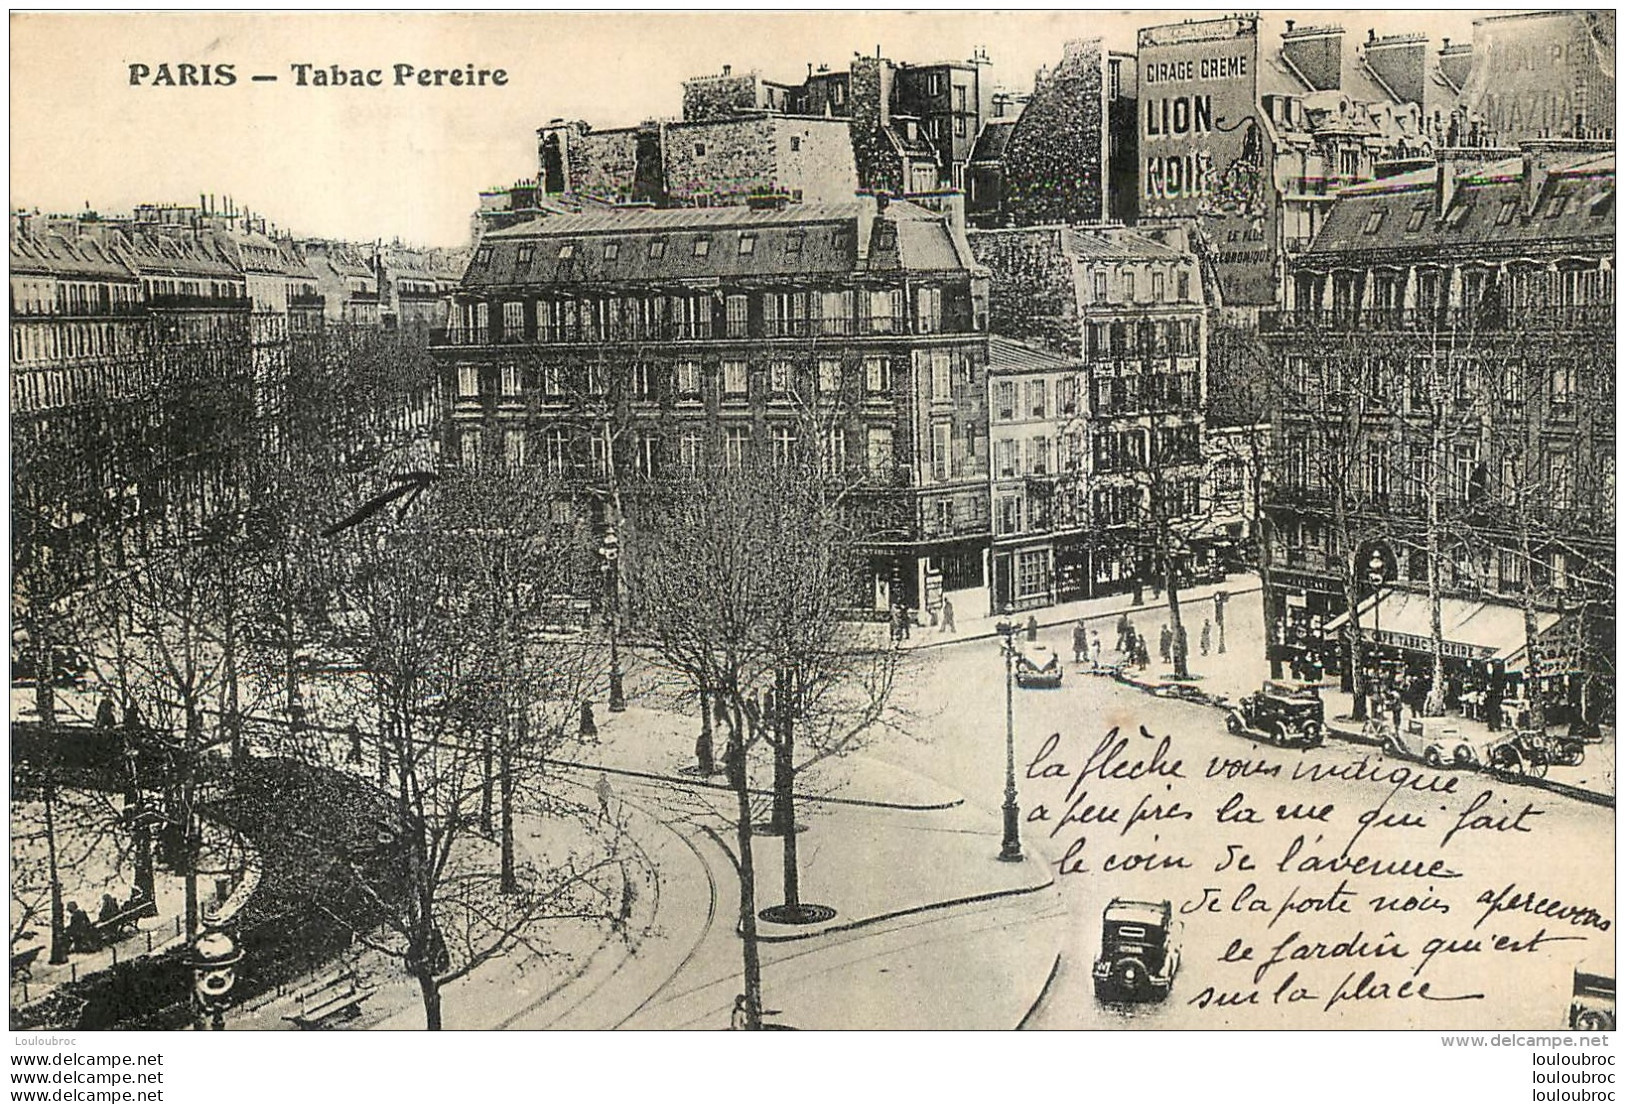 PARIS XVII TABAC PEREIRE - Paris (17)